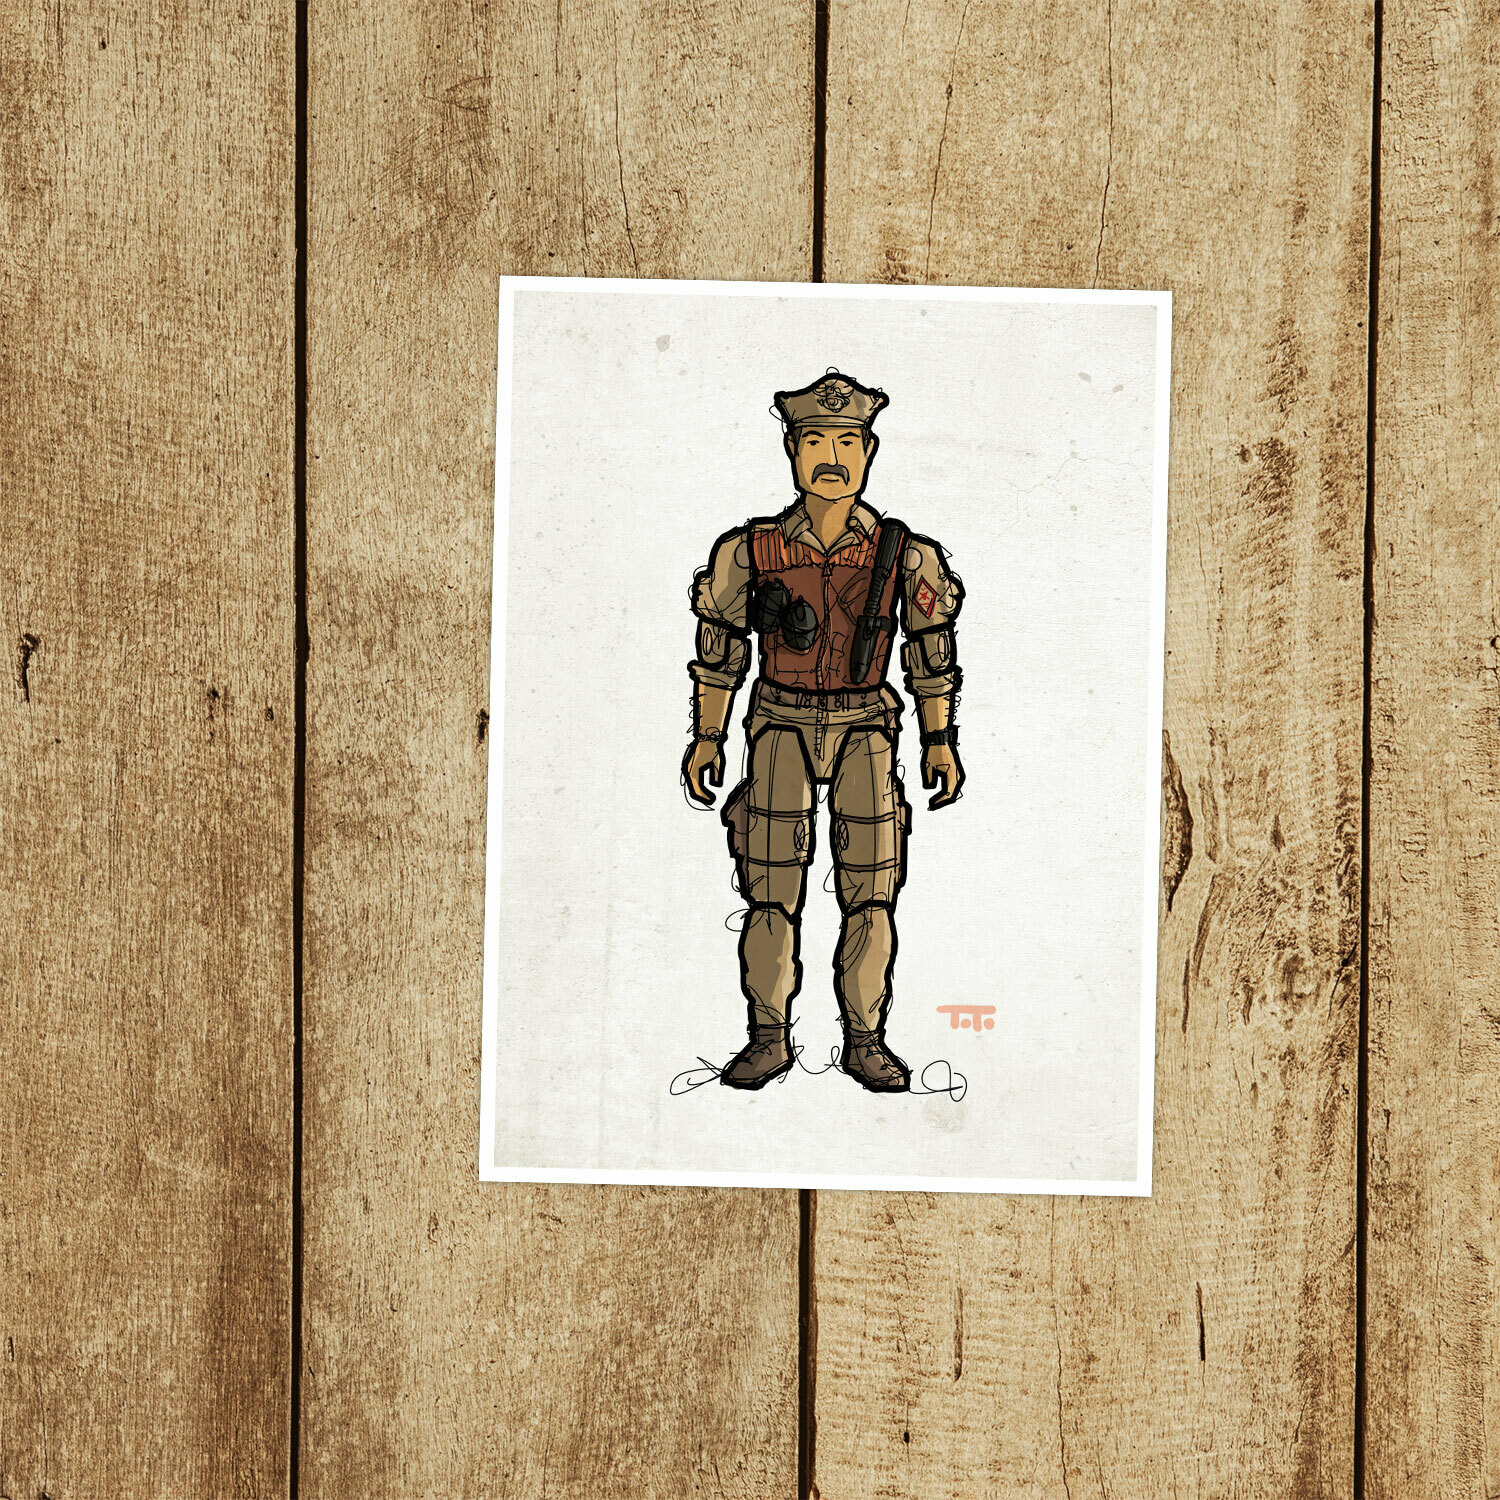 GIJOE365 098: "Leatherneck" (v2) prints